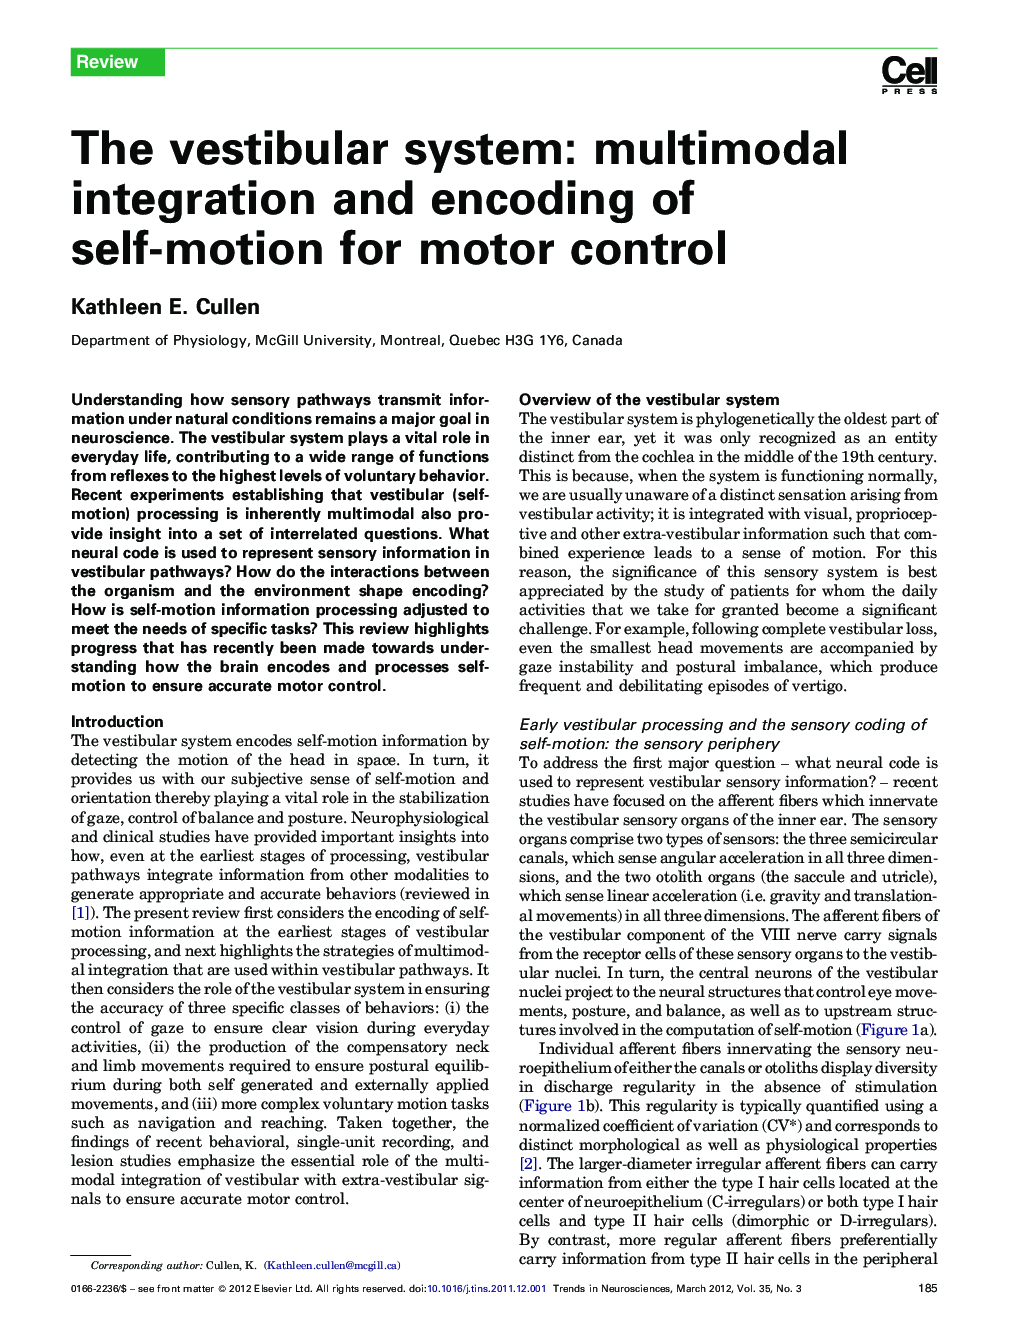 The vestibular system: multimodal integration and encoding of self-motion for motor control